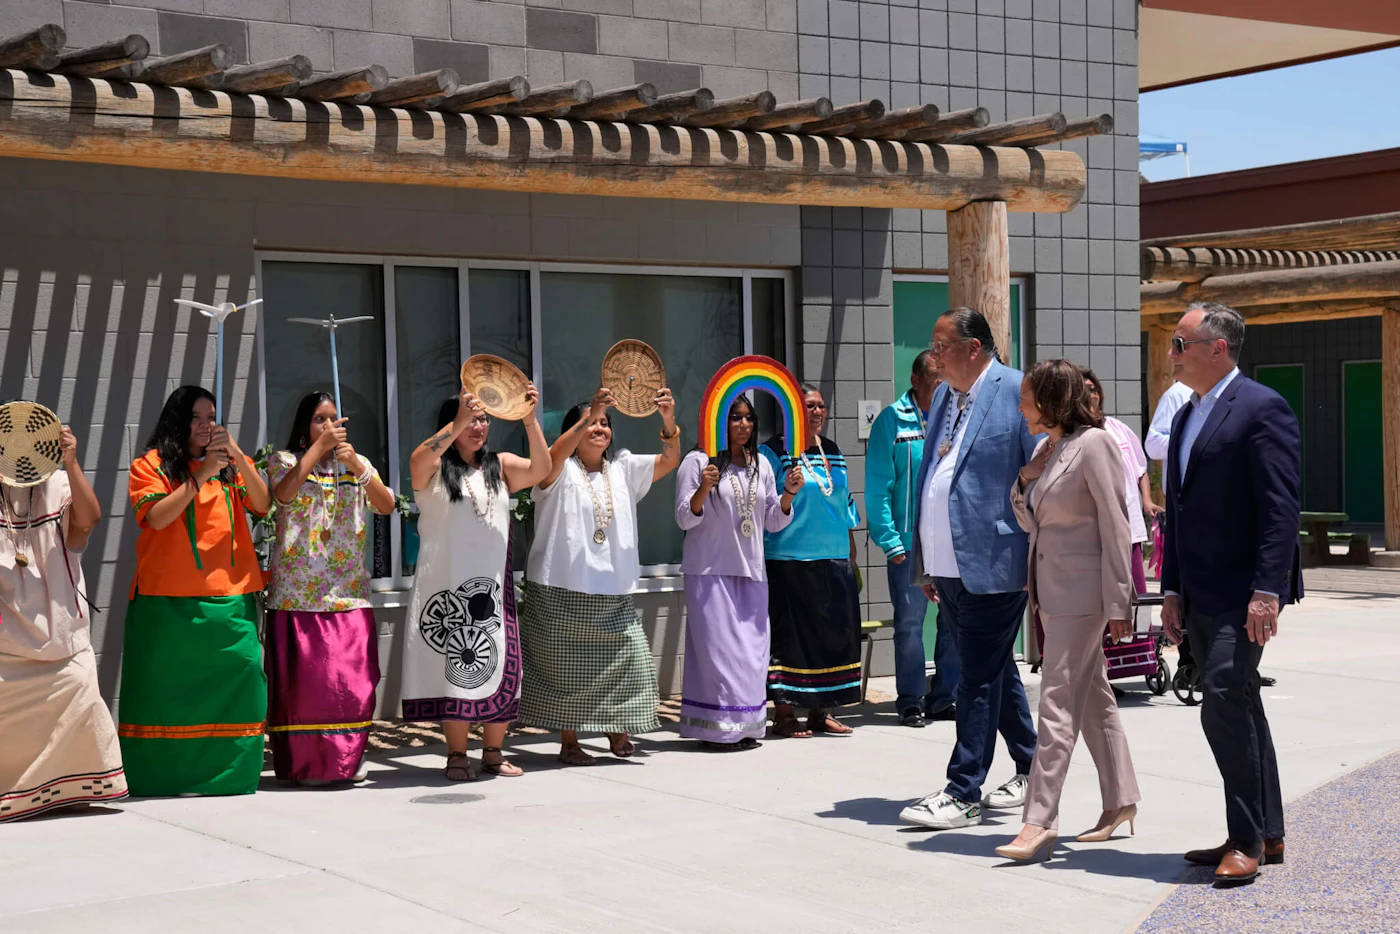 Gila River Indian Community Governor Stephen Roe Lewis greets Vice President Kamala Harris at the Gila River Indian Community, Thursday, July 6, 2023, in Phoenix. (AP Photo/Rick Scuteri)